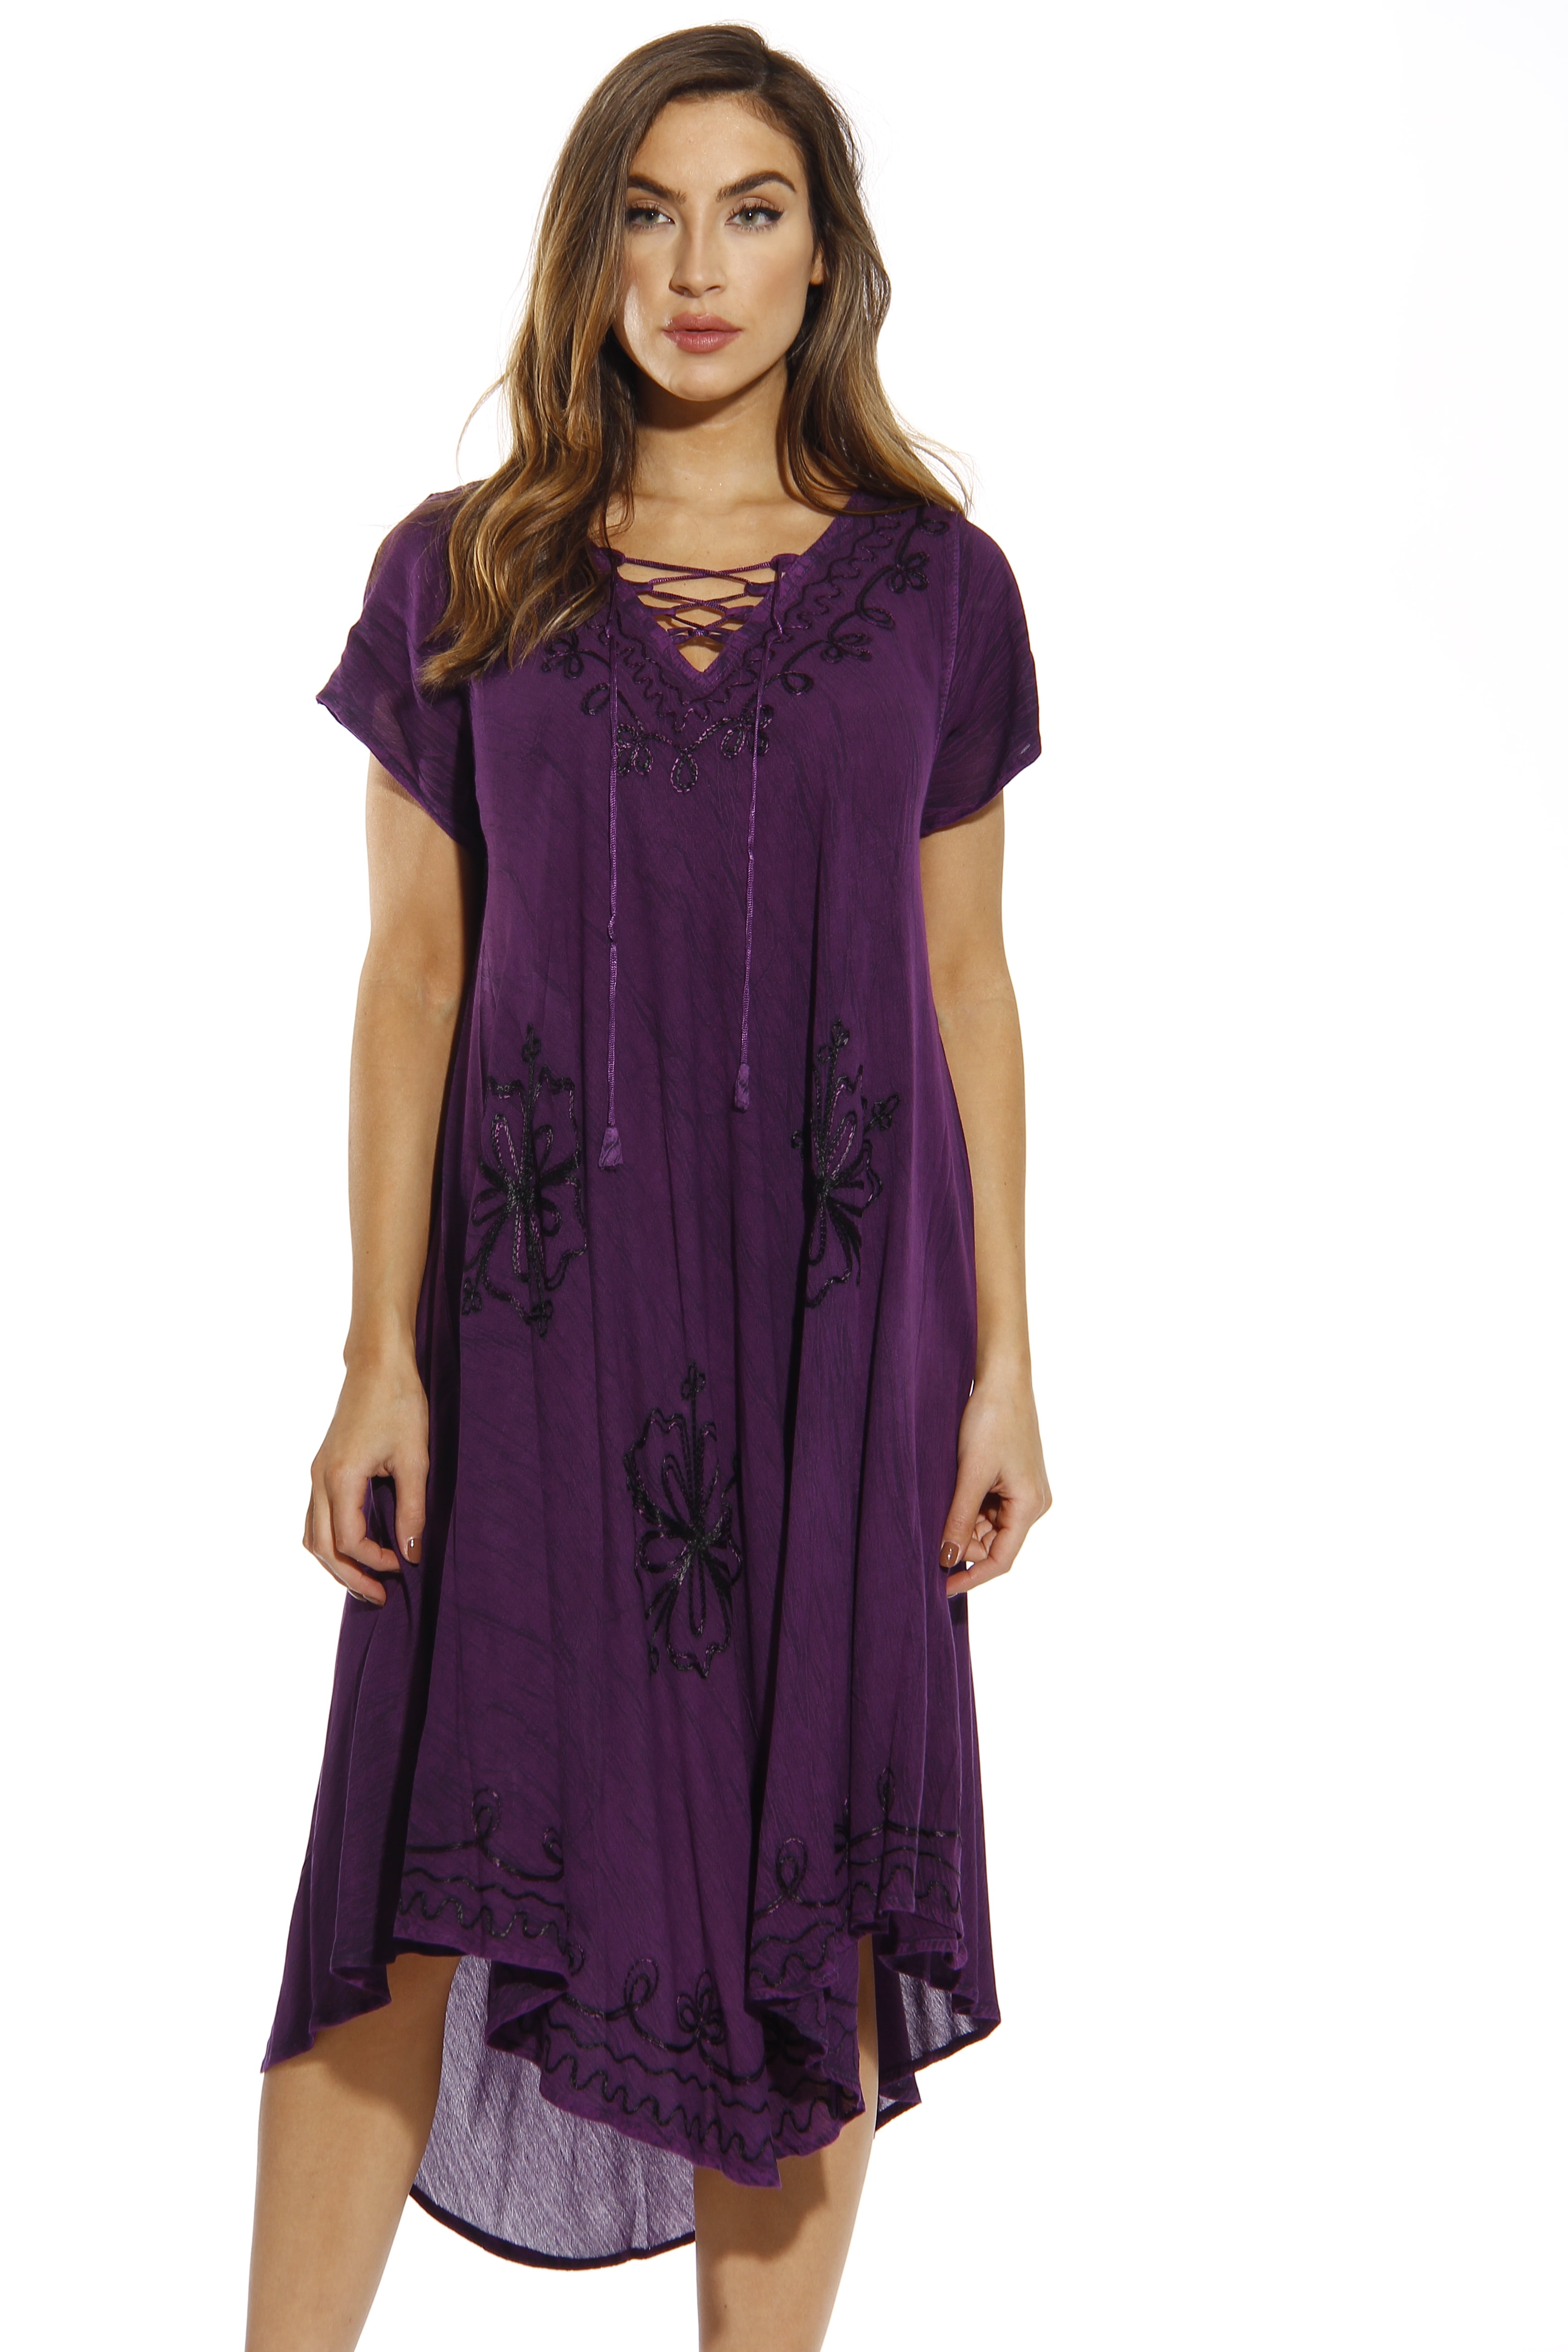 Riviera Sun Dress Dresses for Women (Purple, 3X) - Walmart.com